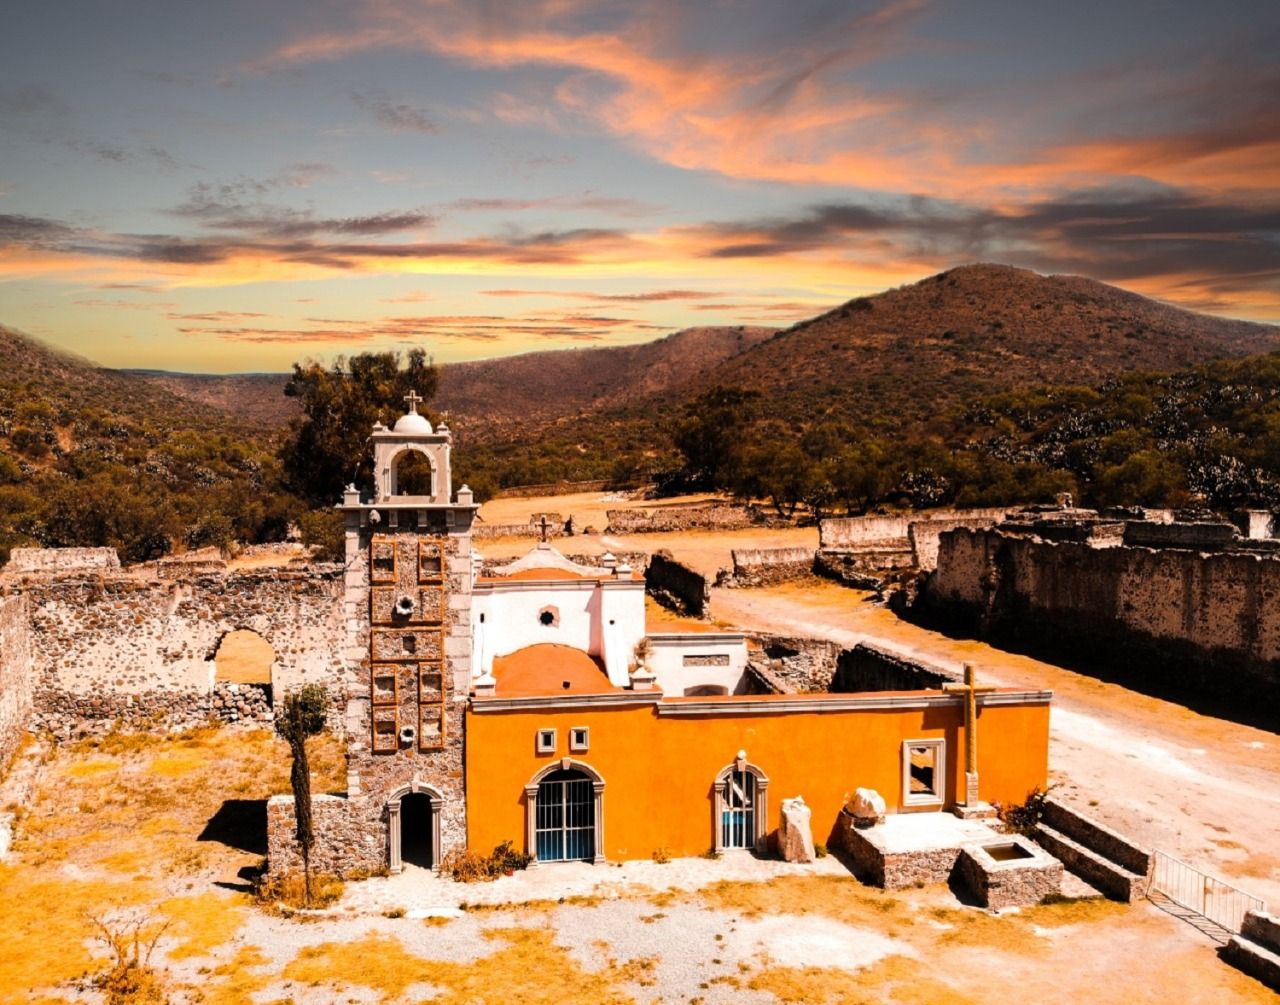 Visita Apaxco, municipio que tiene sitios históricos con riqueza prehispánica